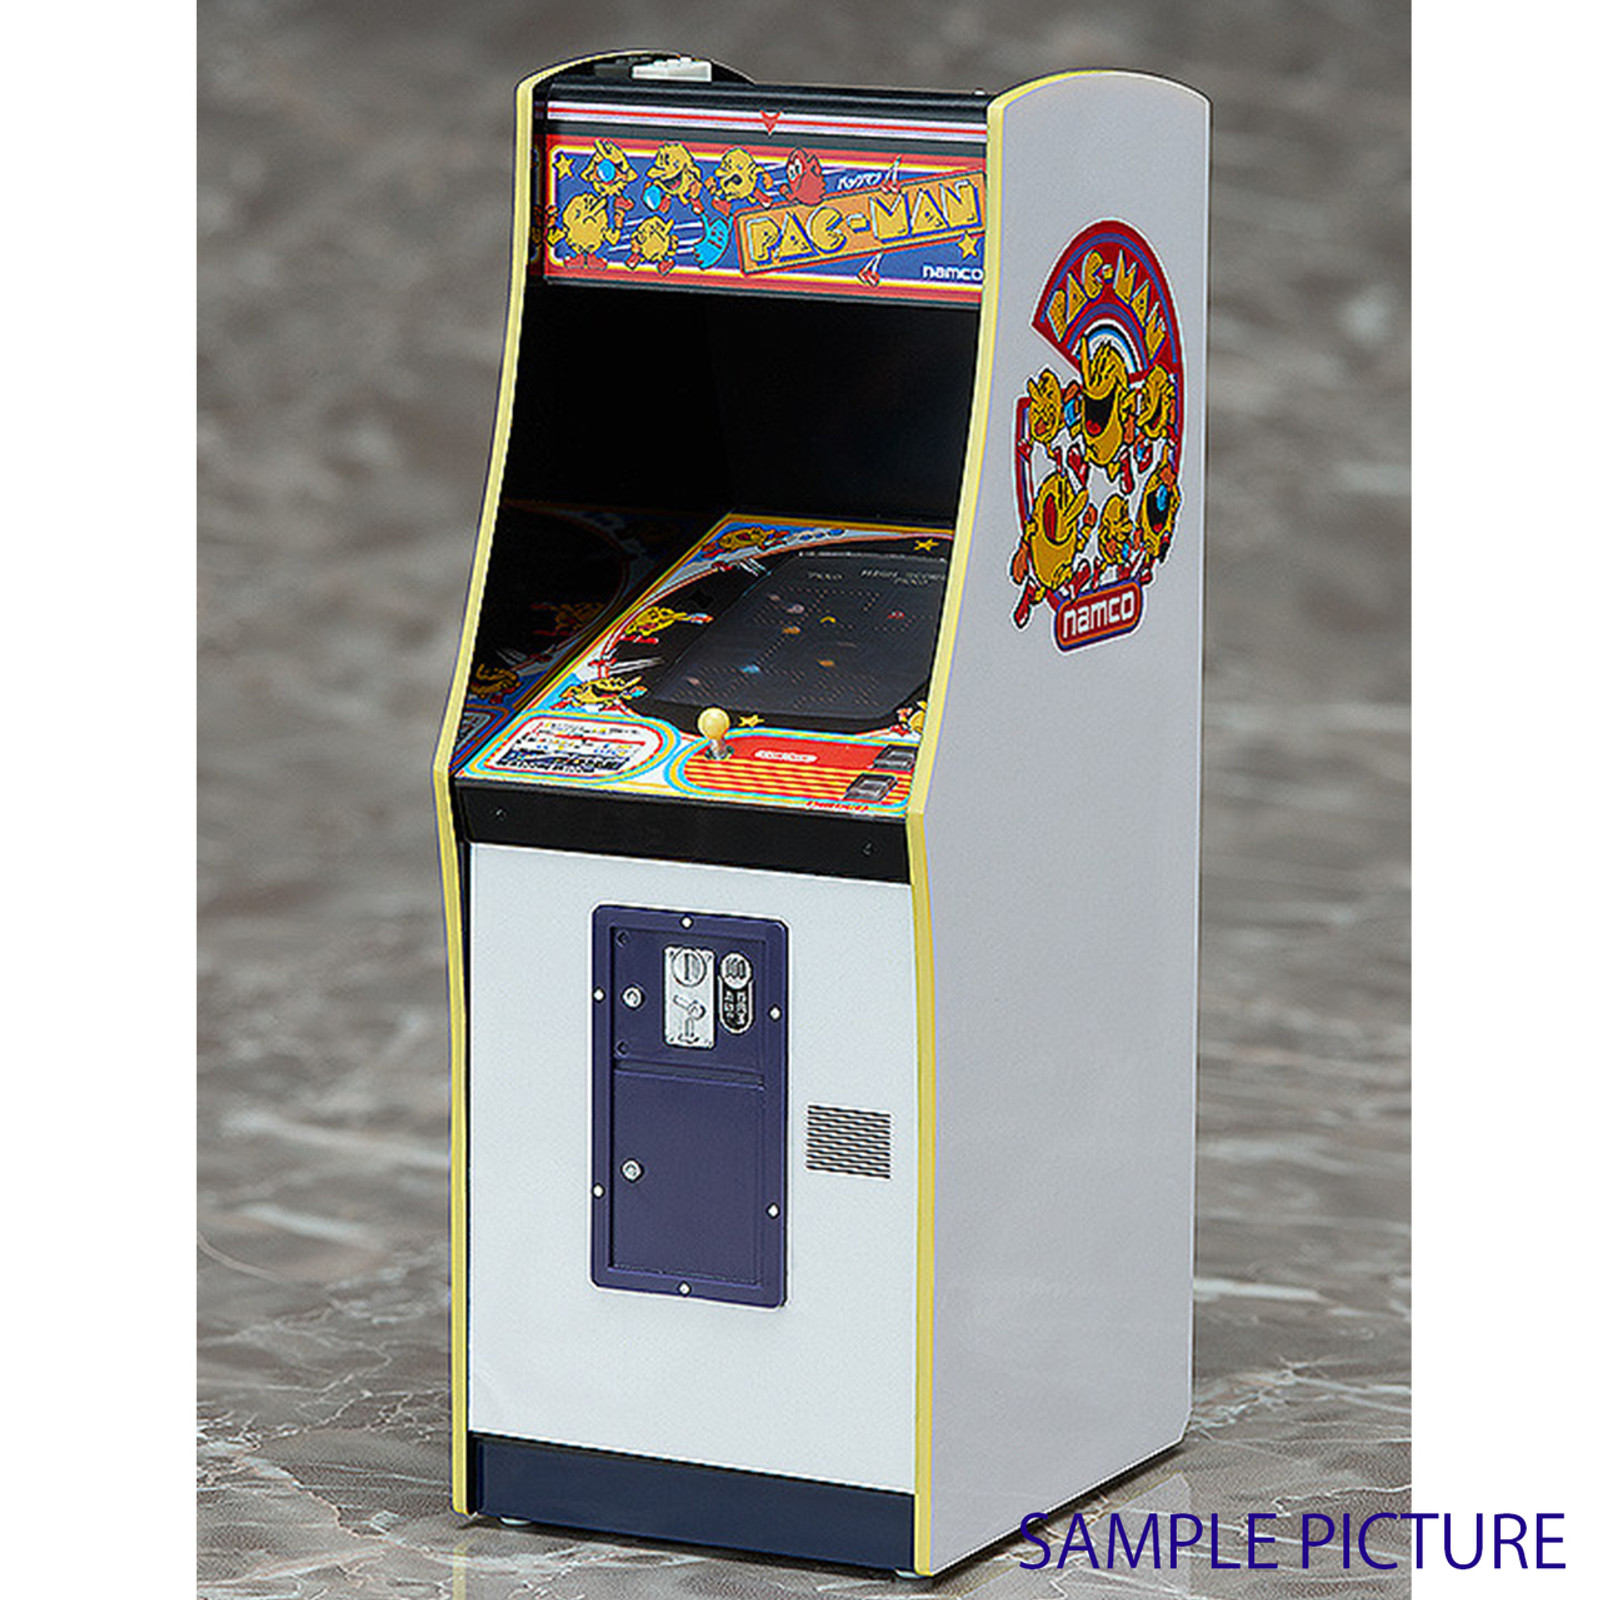 Rally-X Arcade Game Machine Collection Namco 1/12 Miniature Figure 